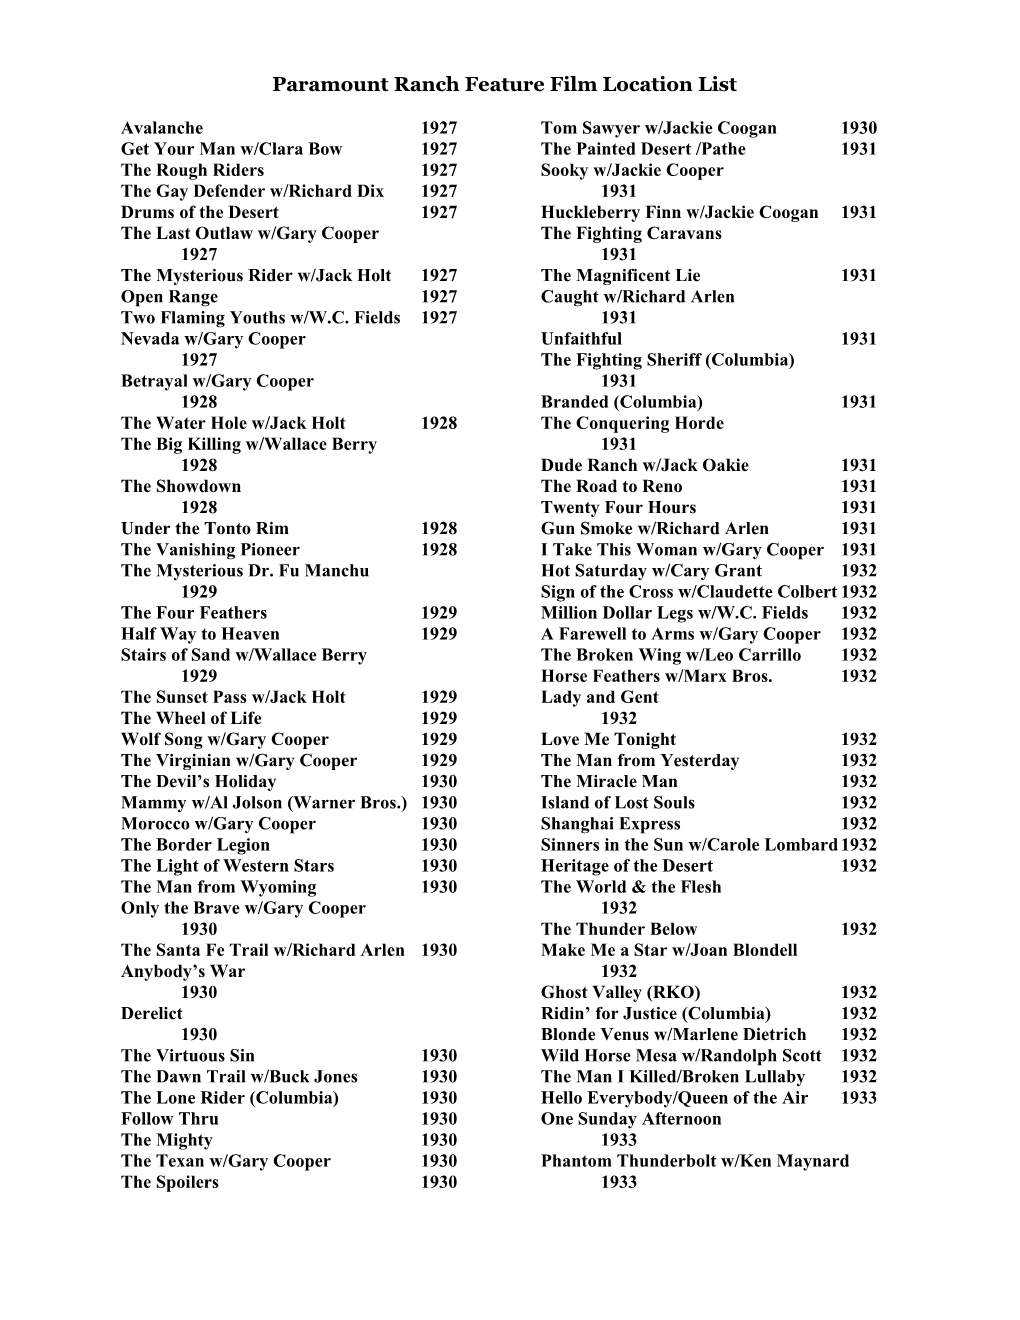 Paramount Ranch Film List